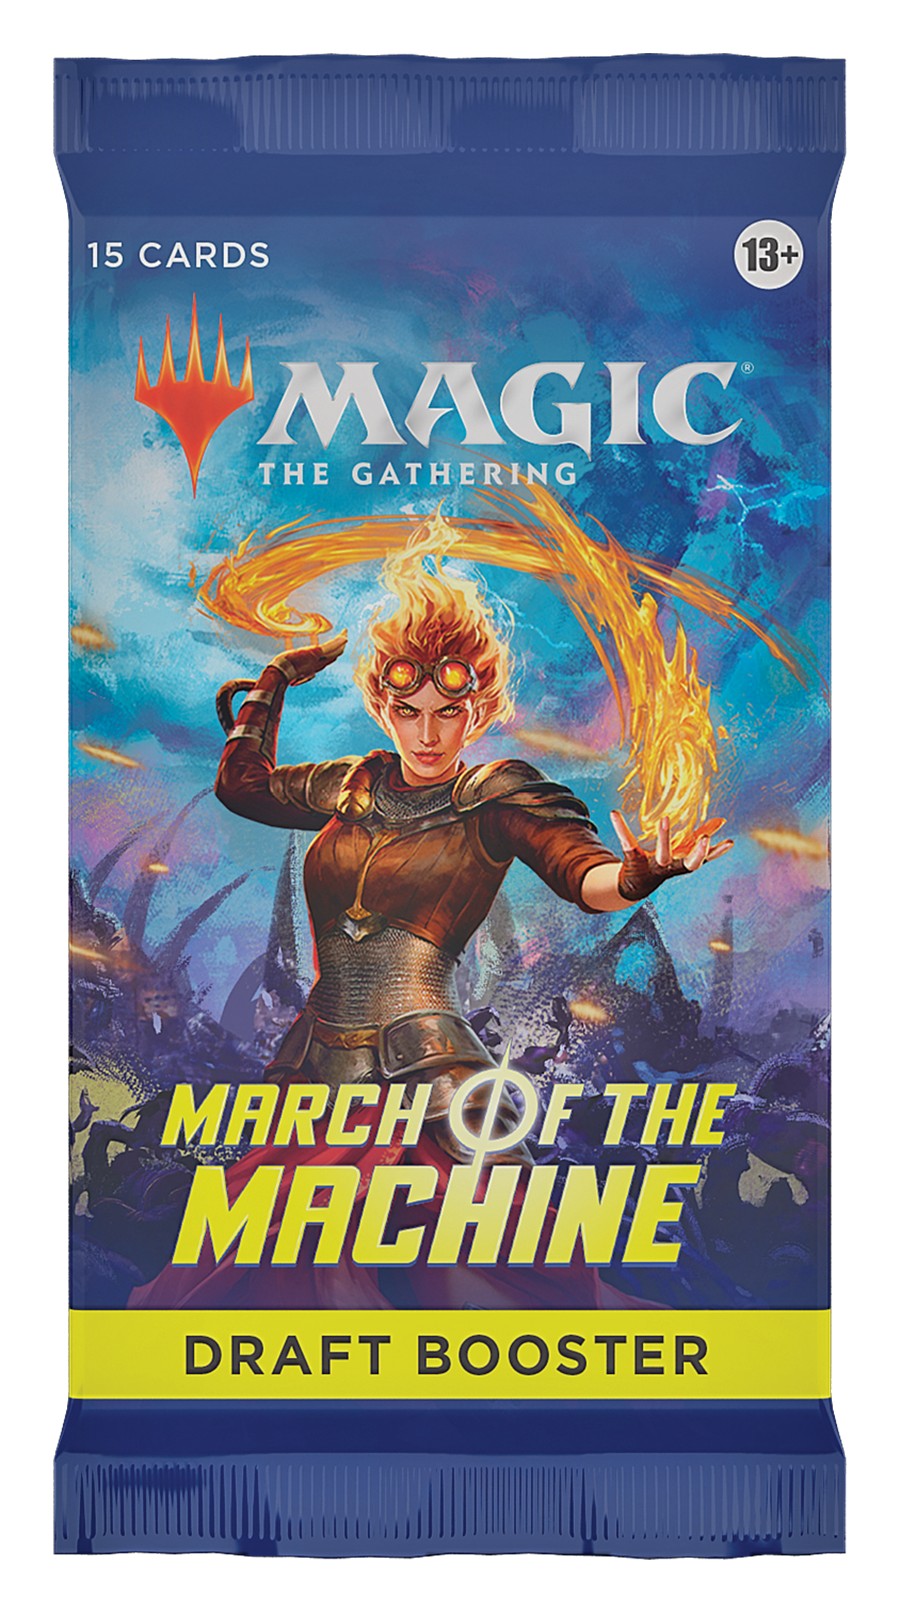 Дополнение для Magic The Gathering Драфт-бустер издания March of the Machine на английском